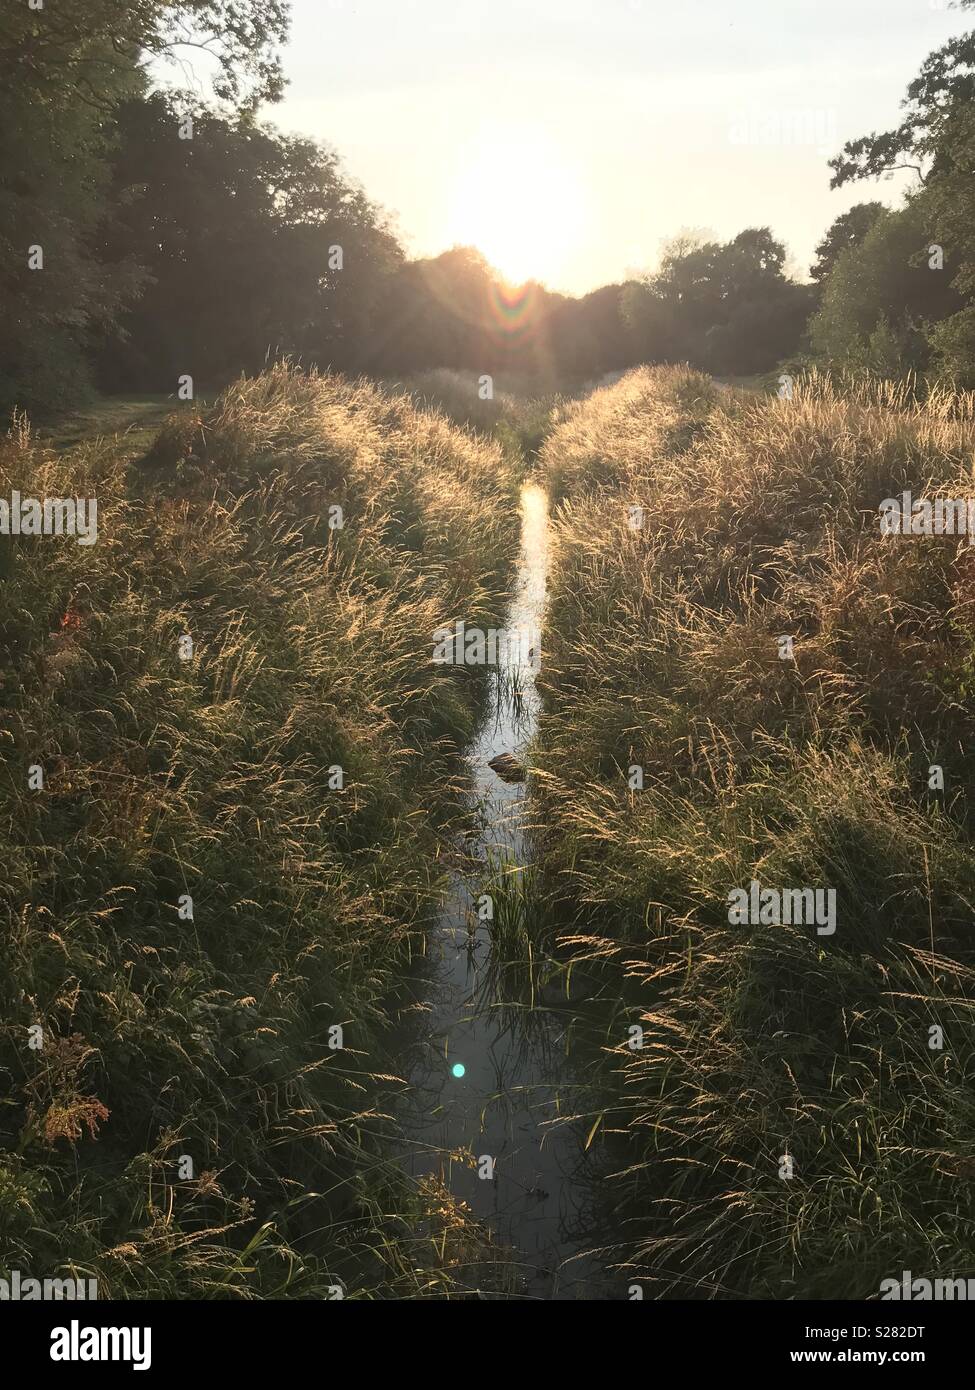 Stream running through overgrown grass at sunset Stock Photo